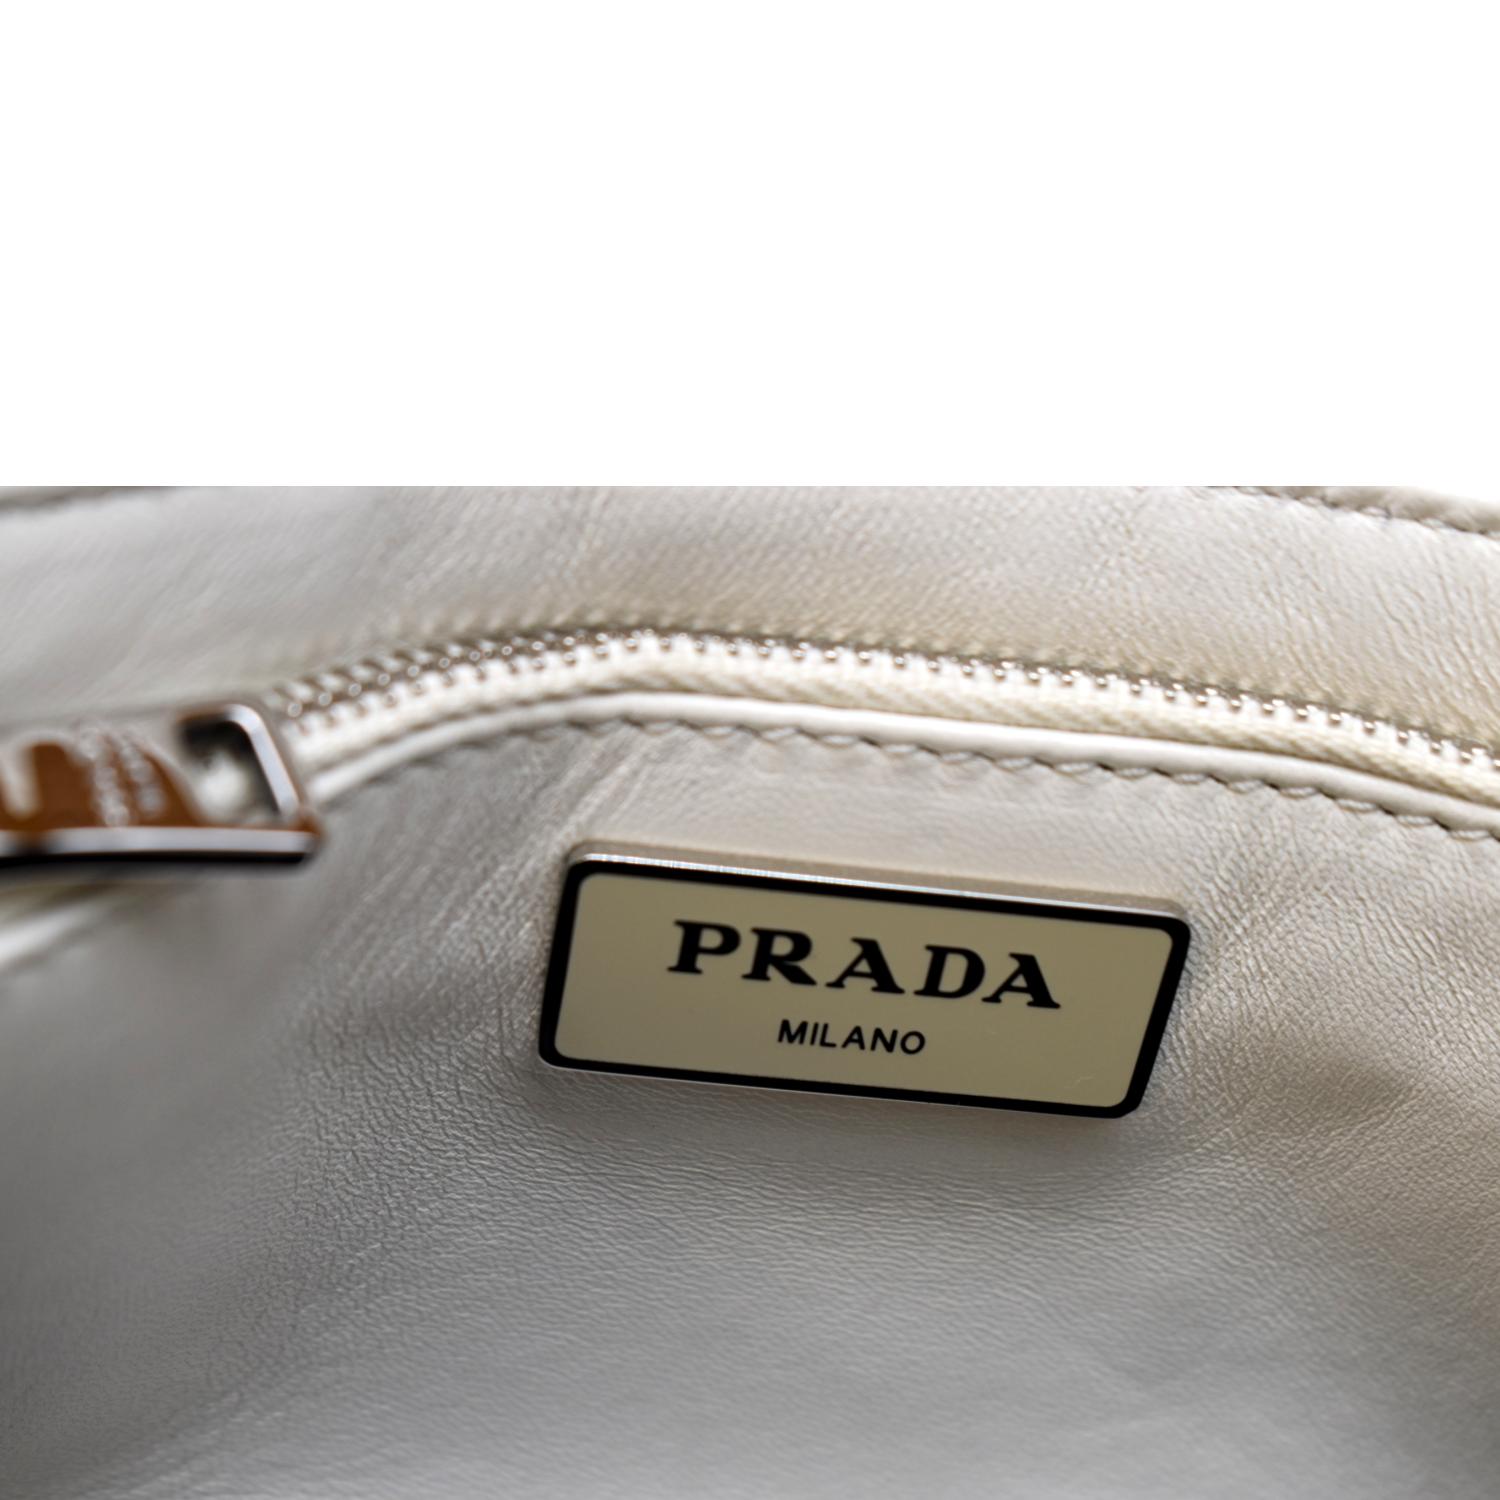 Prada, Accessories, Authentic Vintage Prada Belt See Pics For Serial  Number